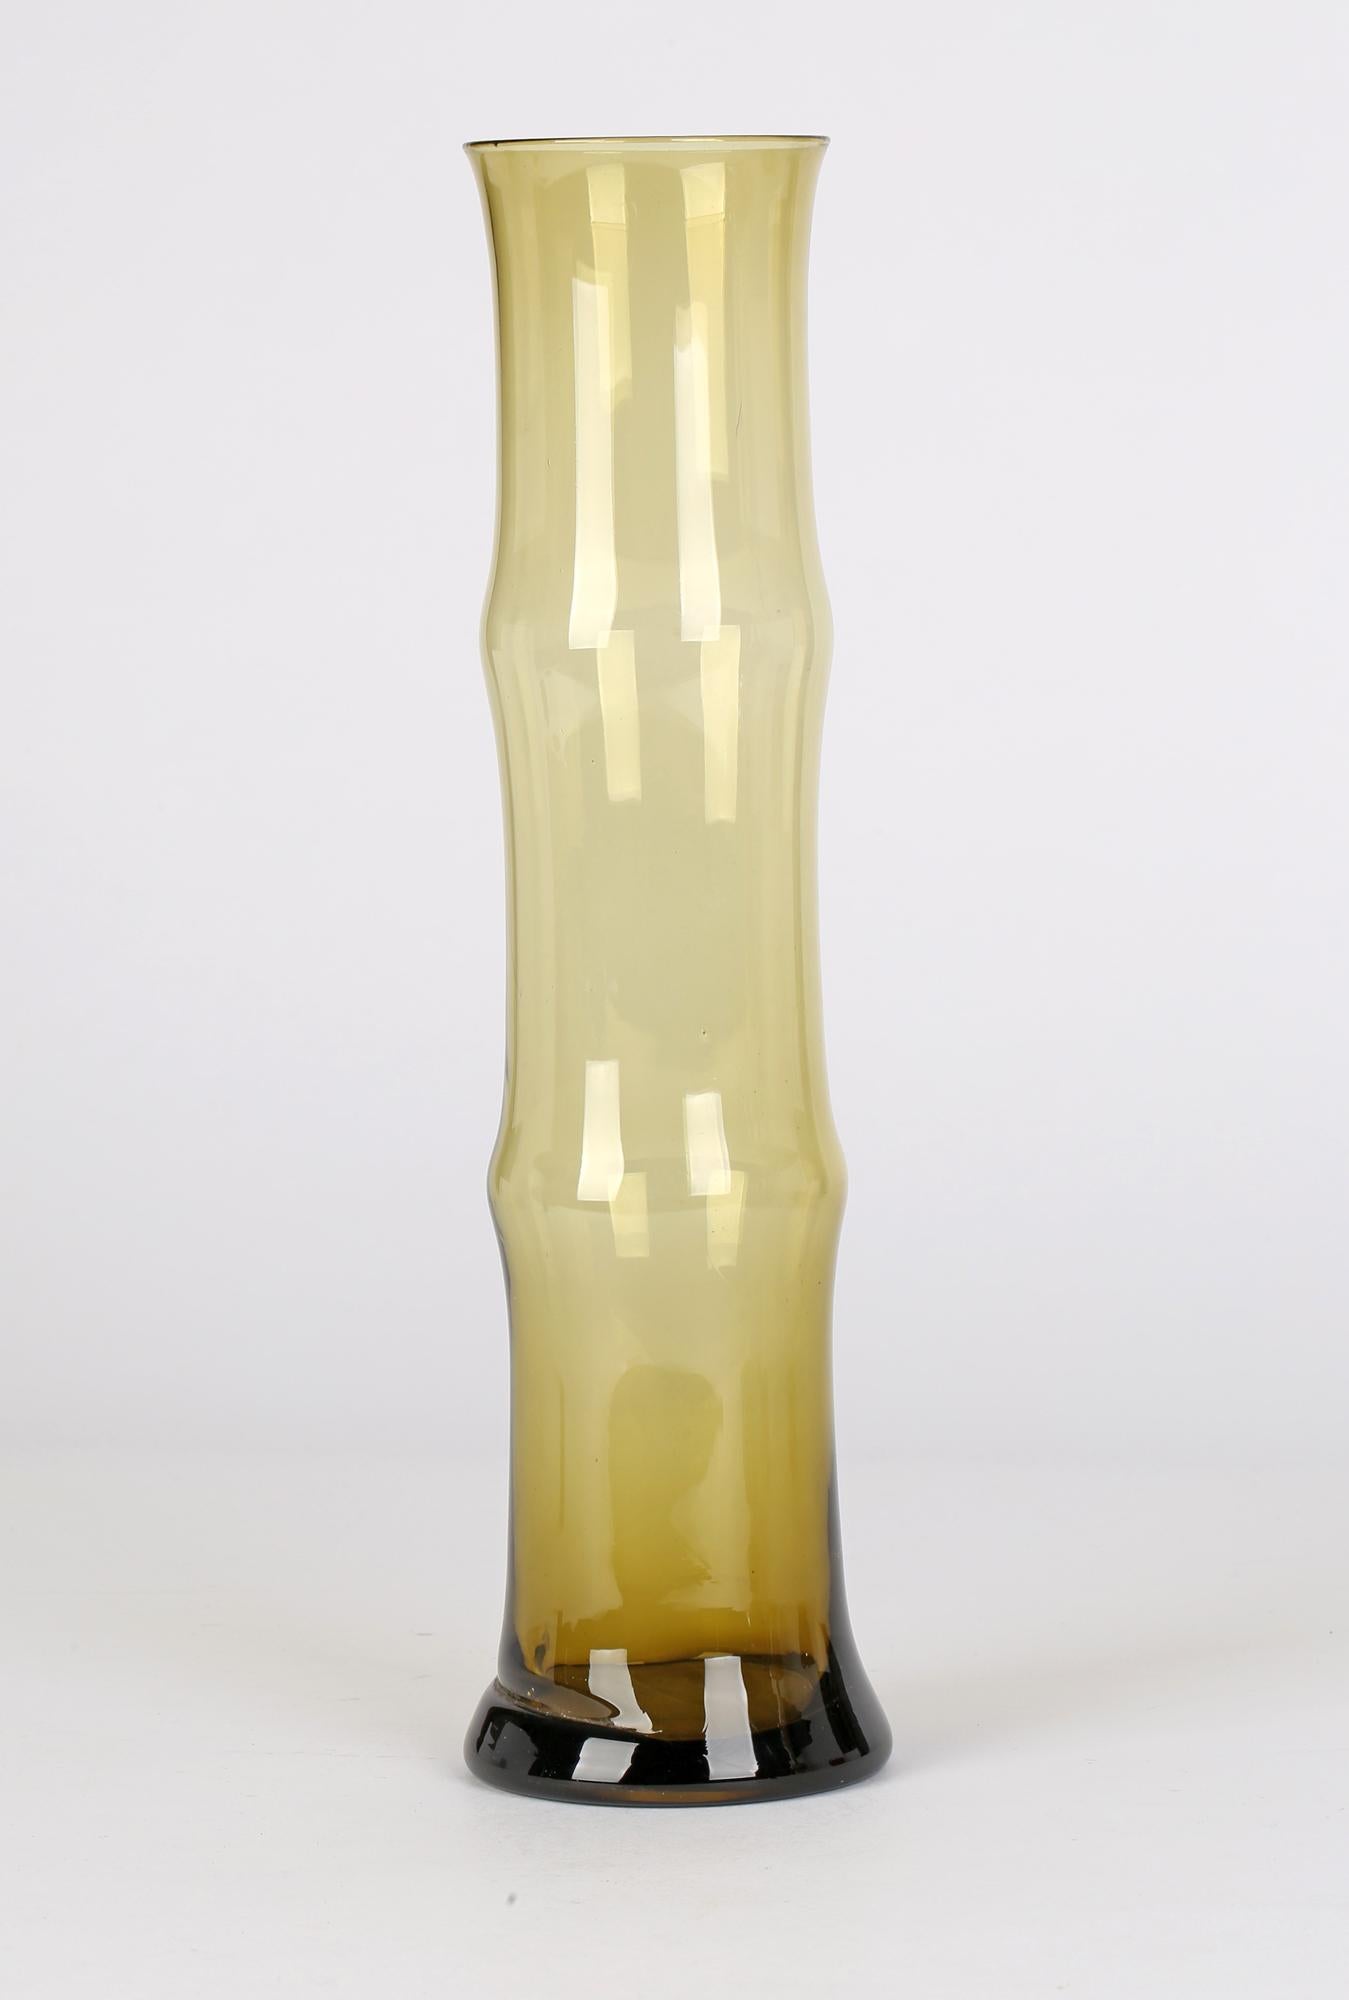 bamboo glass vase